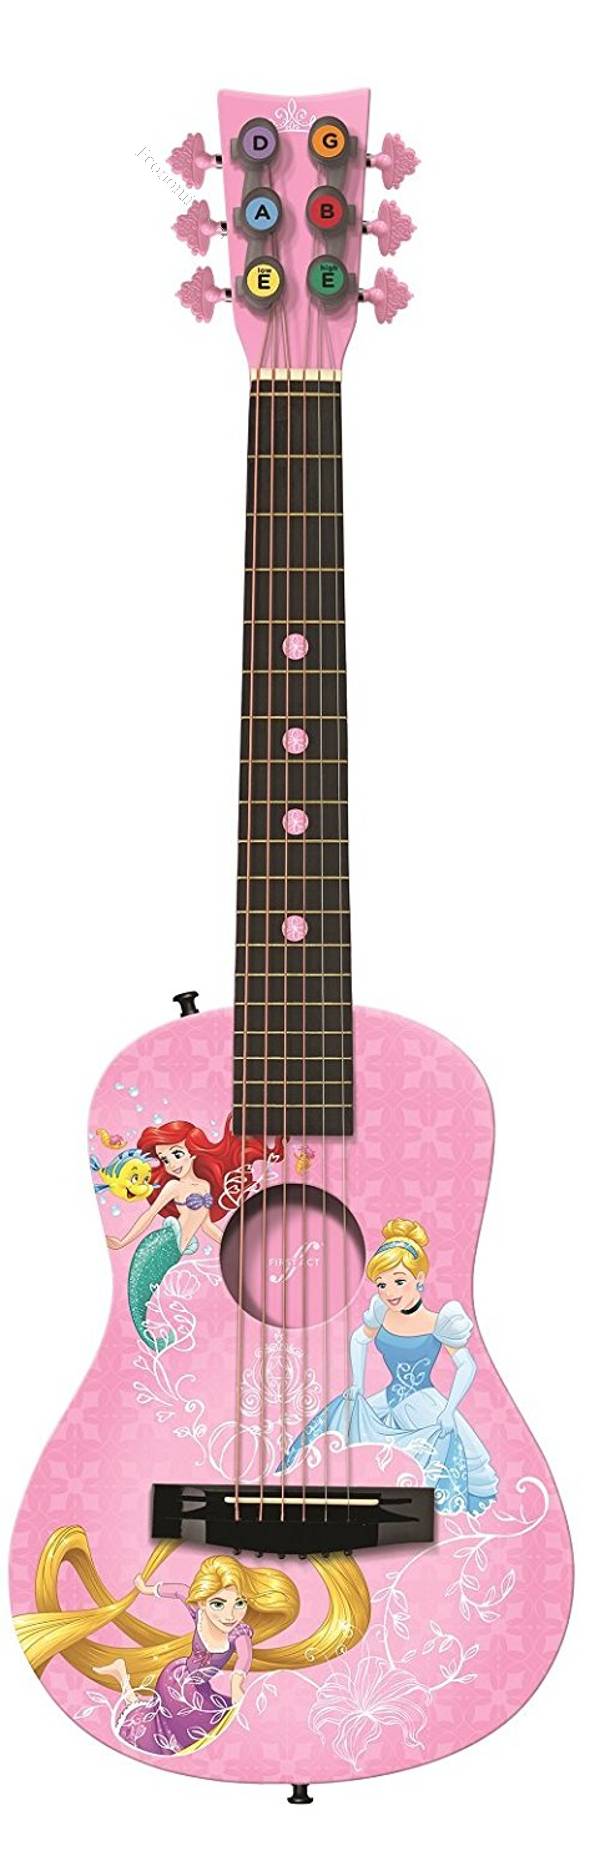 Guitarra Acústica Princesas de Disney Act 2017-09-03 de El Mercurio